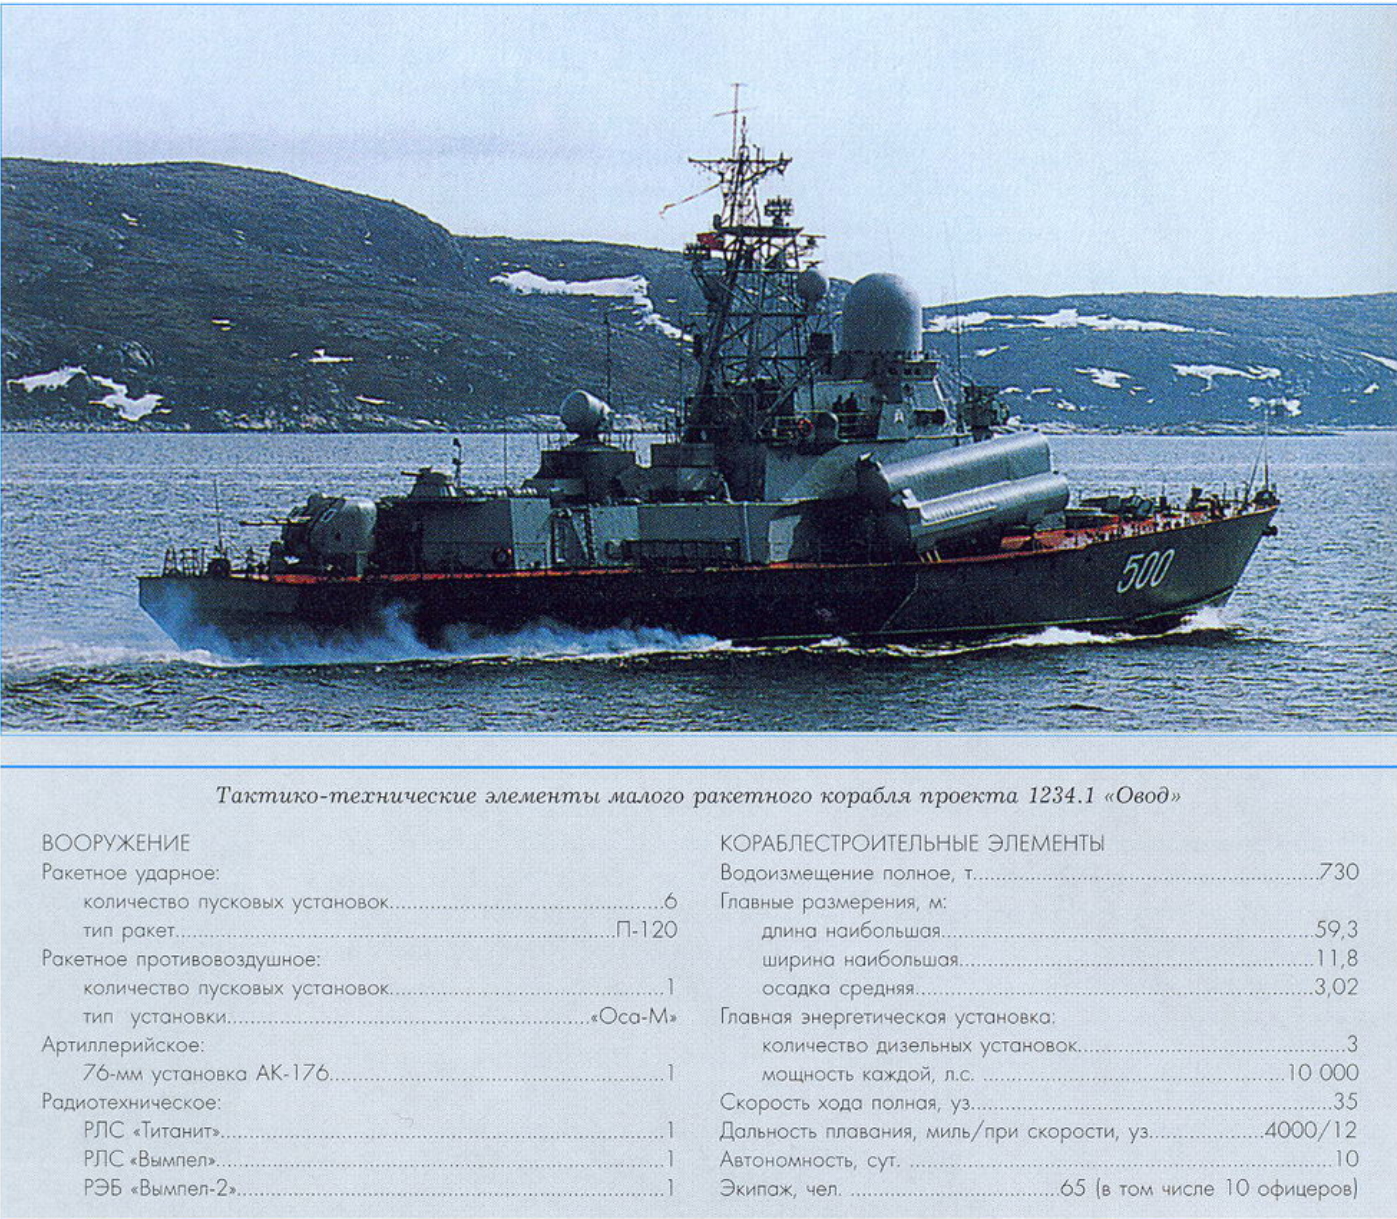 Soviet Navy Era – Small Surface Combatants